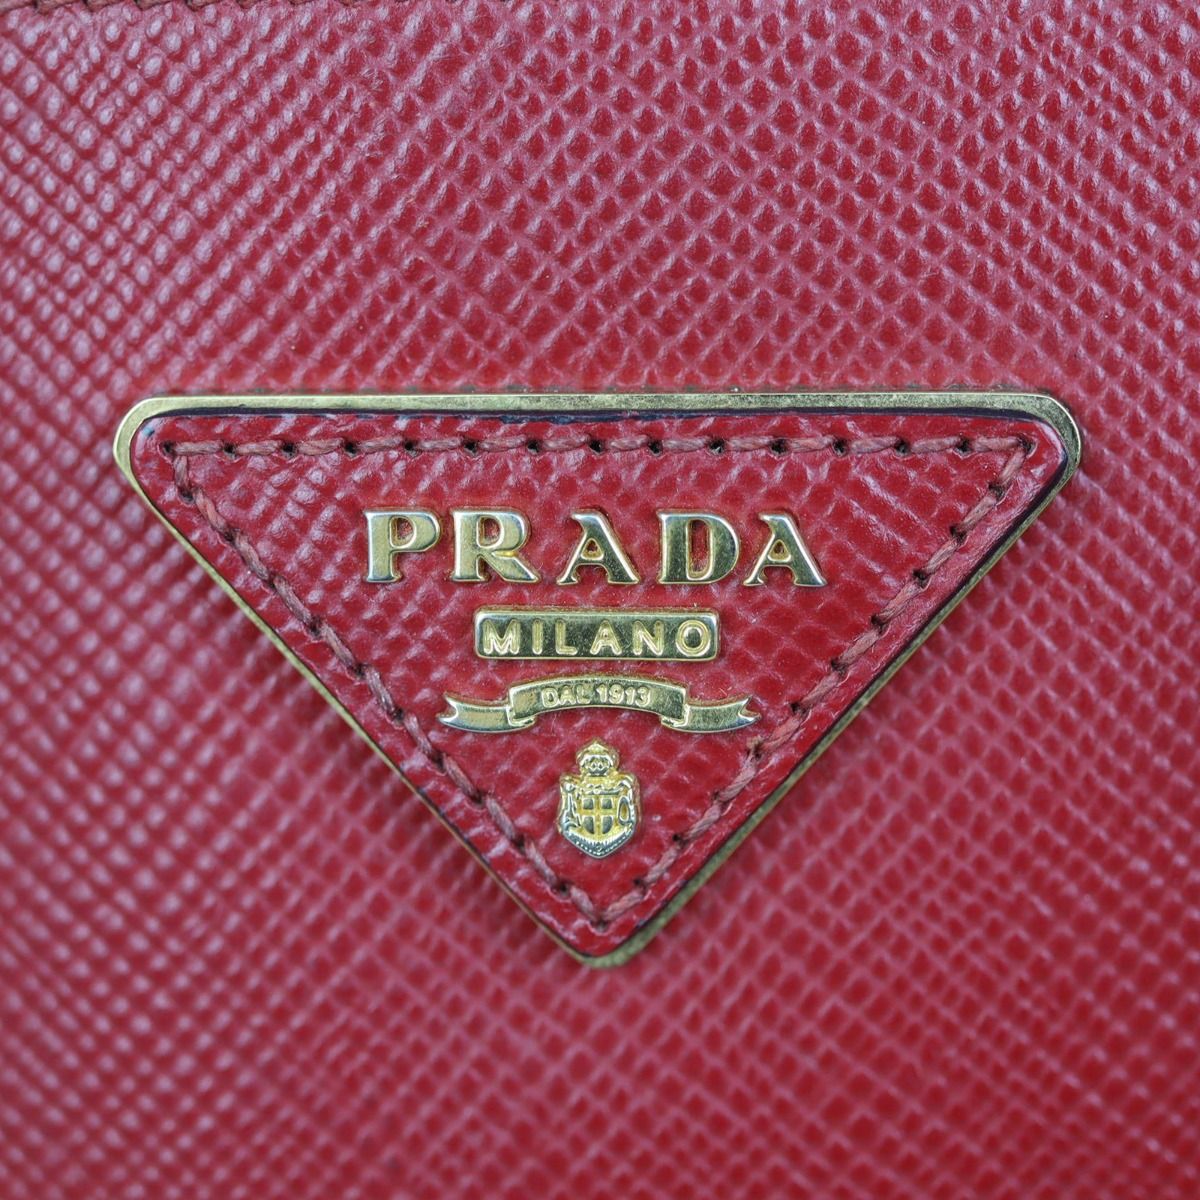 Sydney's Fashion Diary: Review: Prada Cuir Medium Double Bag in Marmo